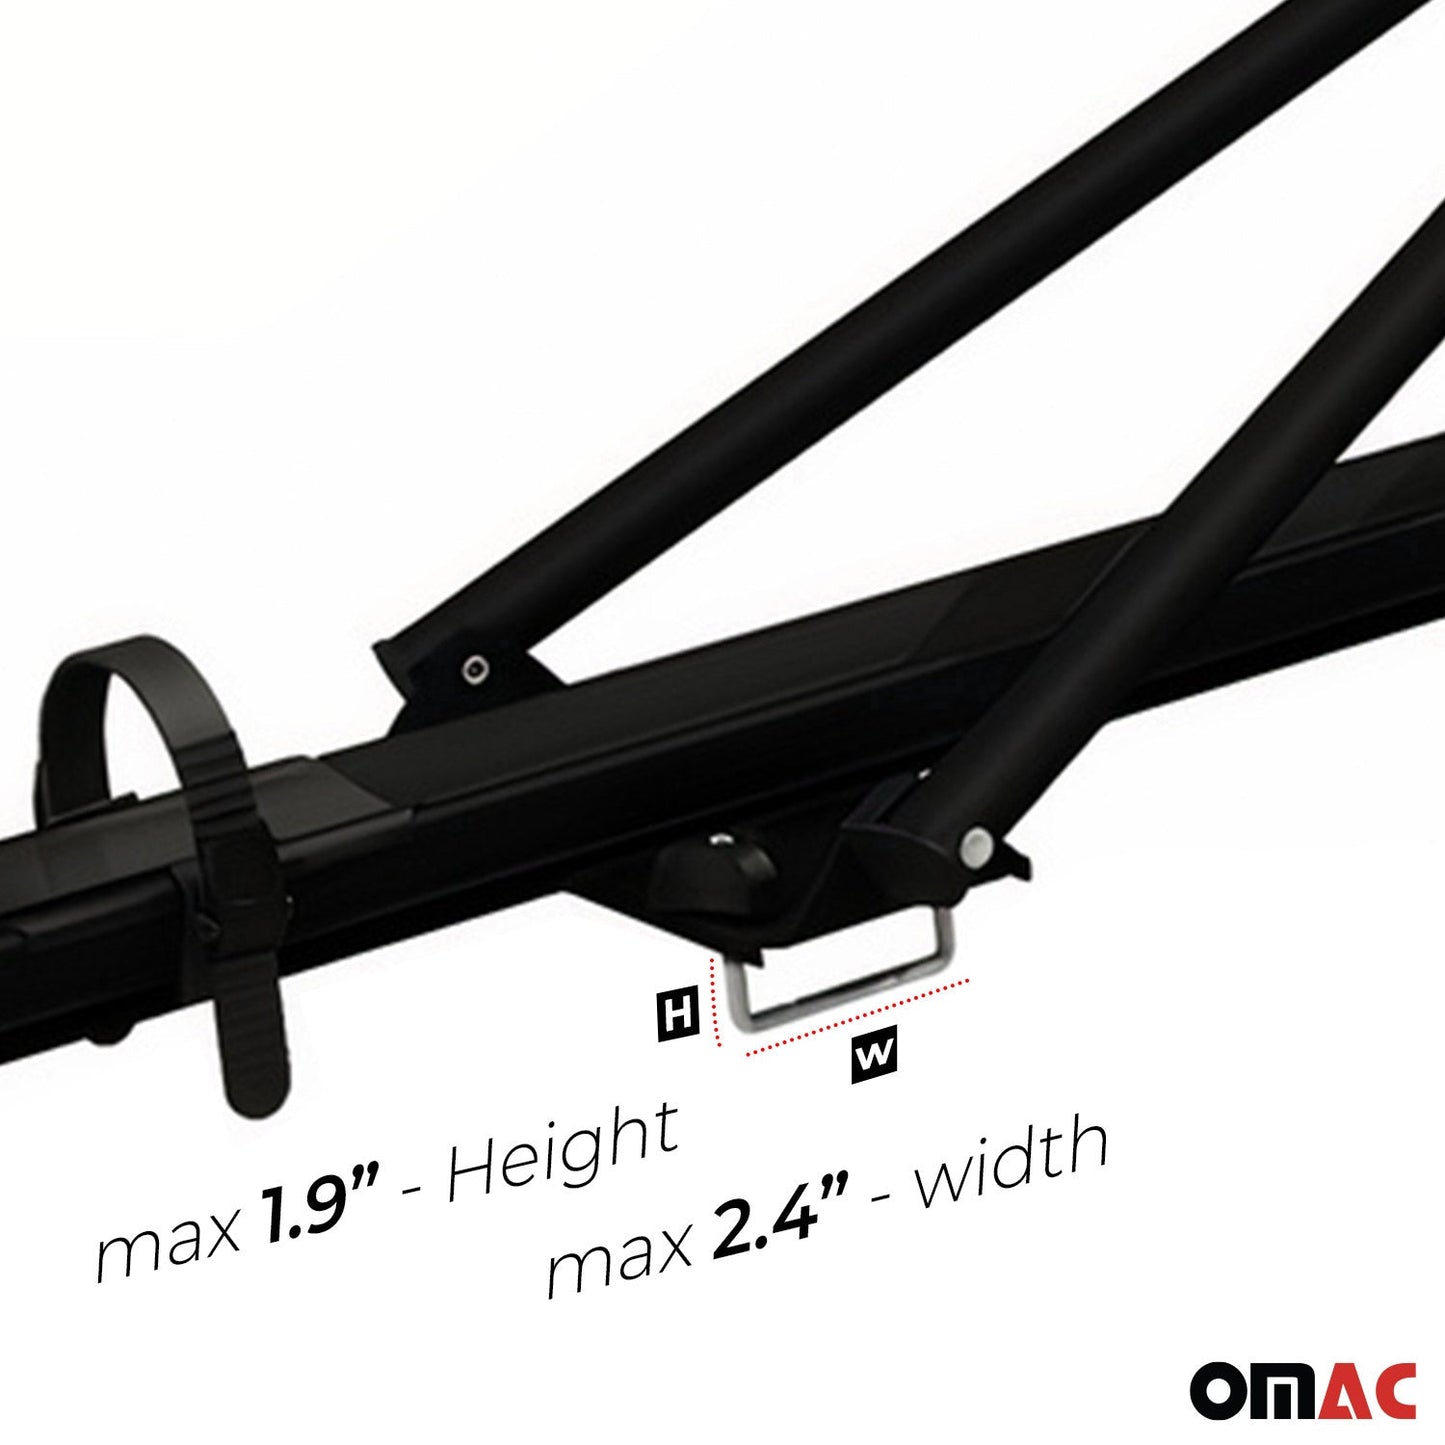 OMAC Bike Rack Carrier Roof Racks Set for Kia Soul 2010-2013 Black 3x U020667